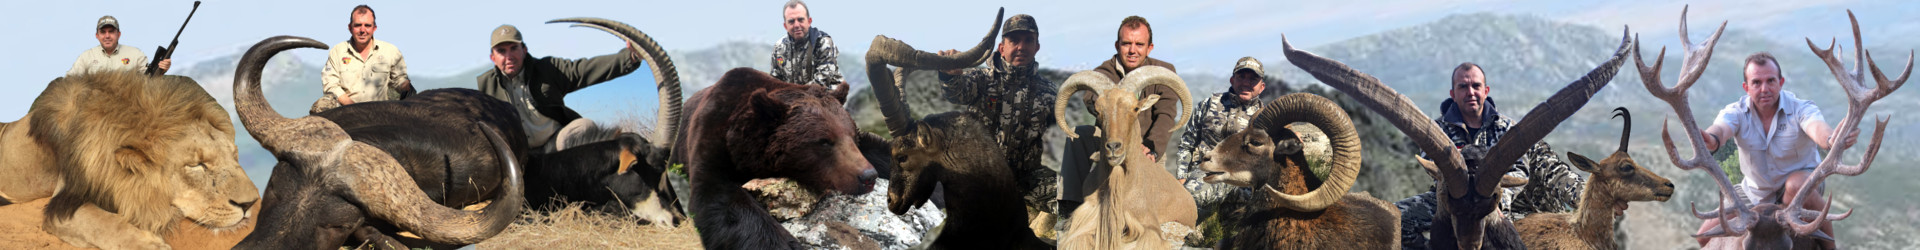 Ibex hunt in mid-Asia, Kyrgyzstan